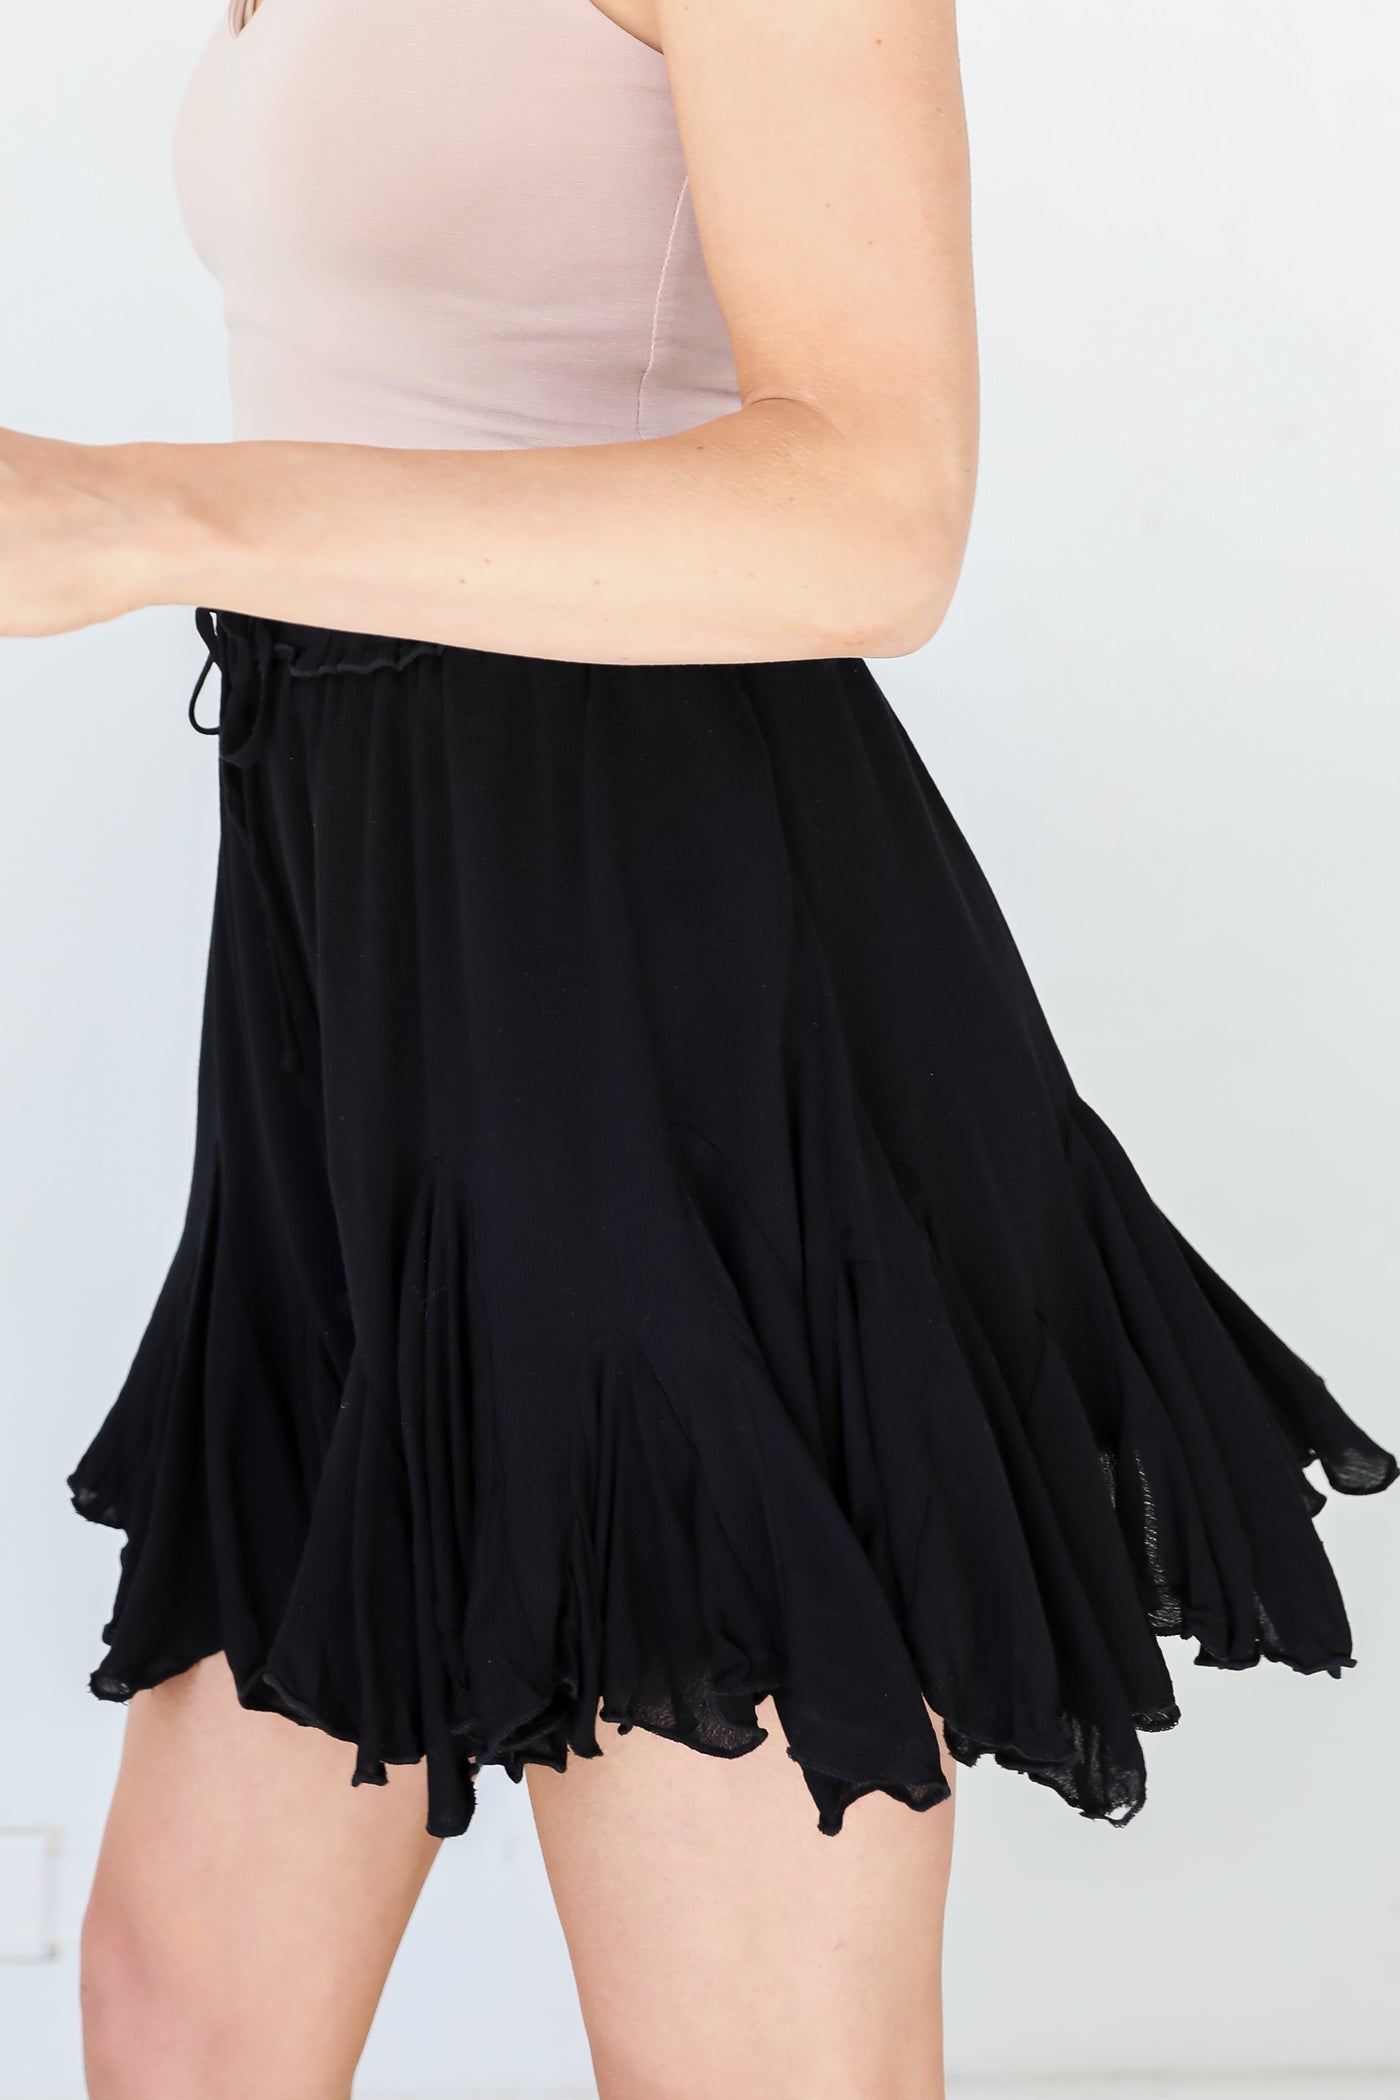 black Mini Skirt side view